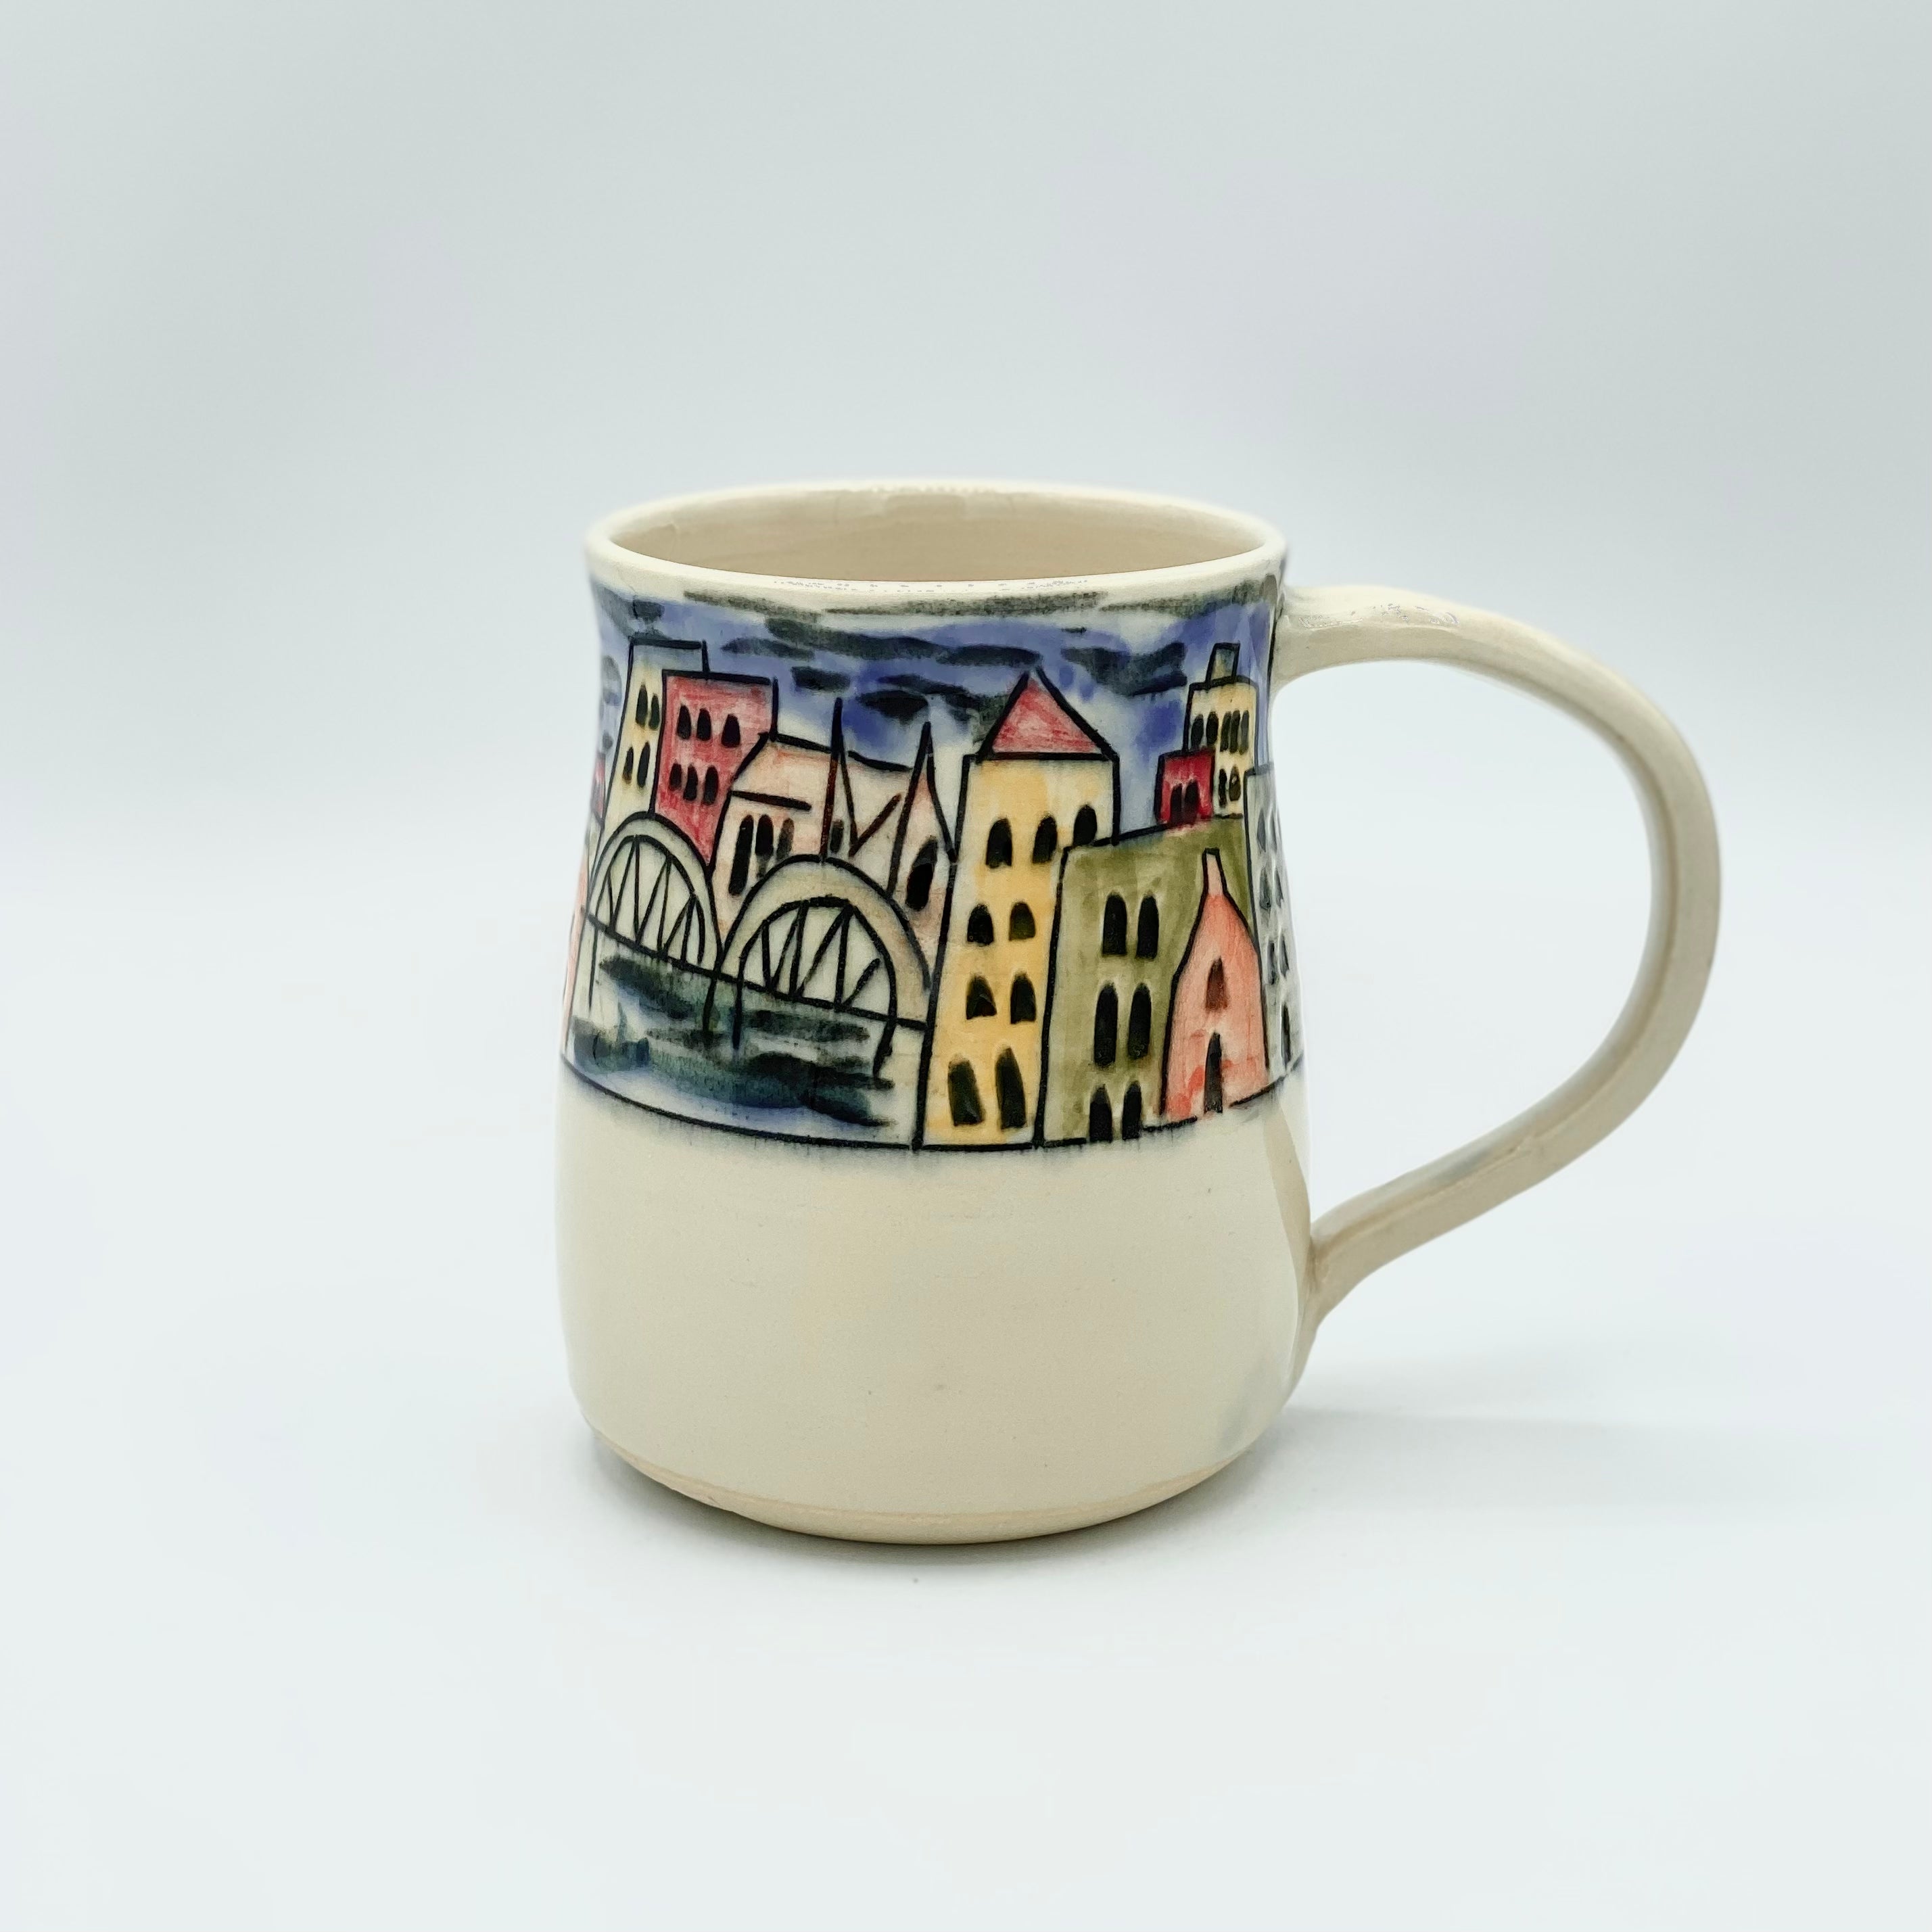 Cityscape Mug by Maru Pottery